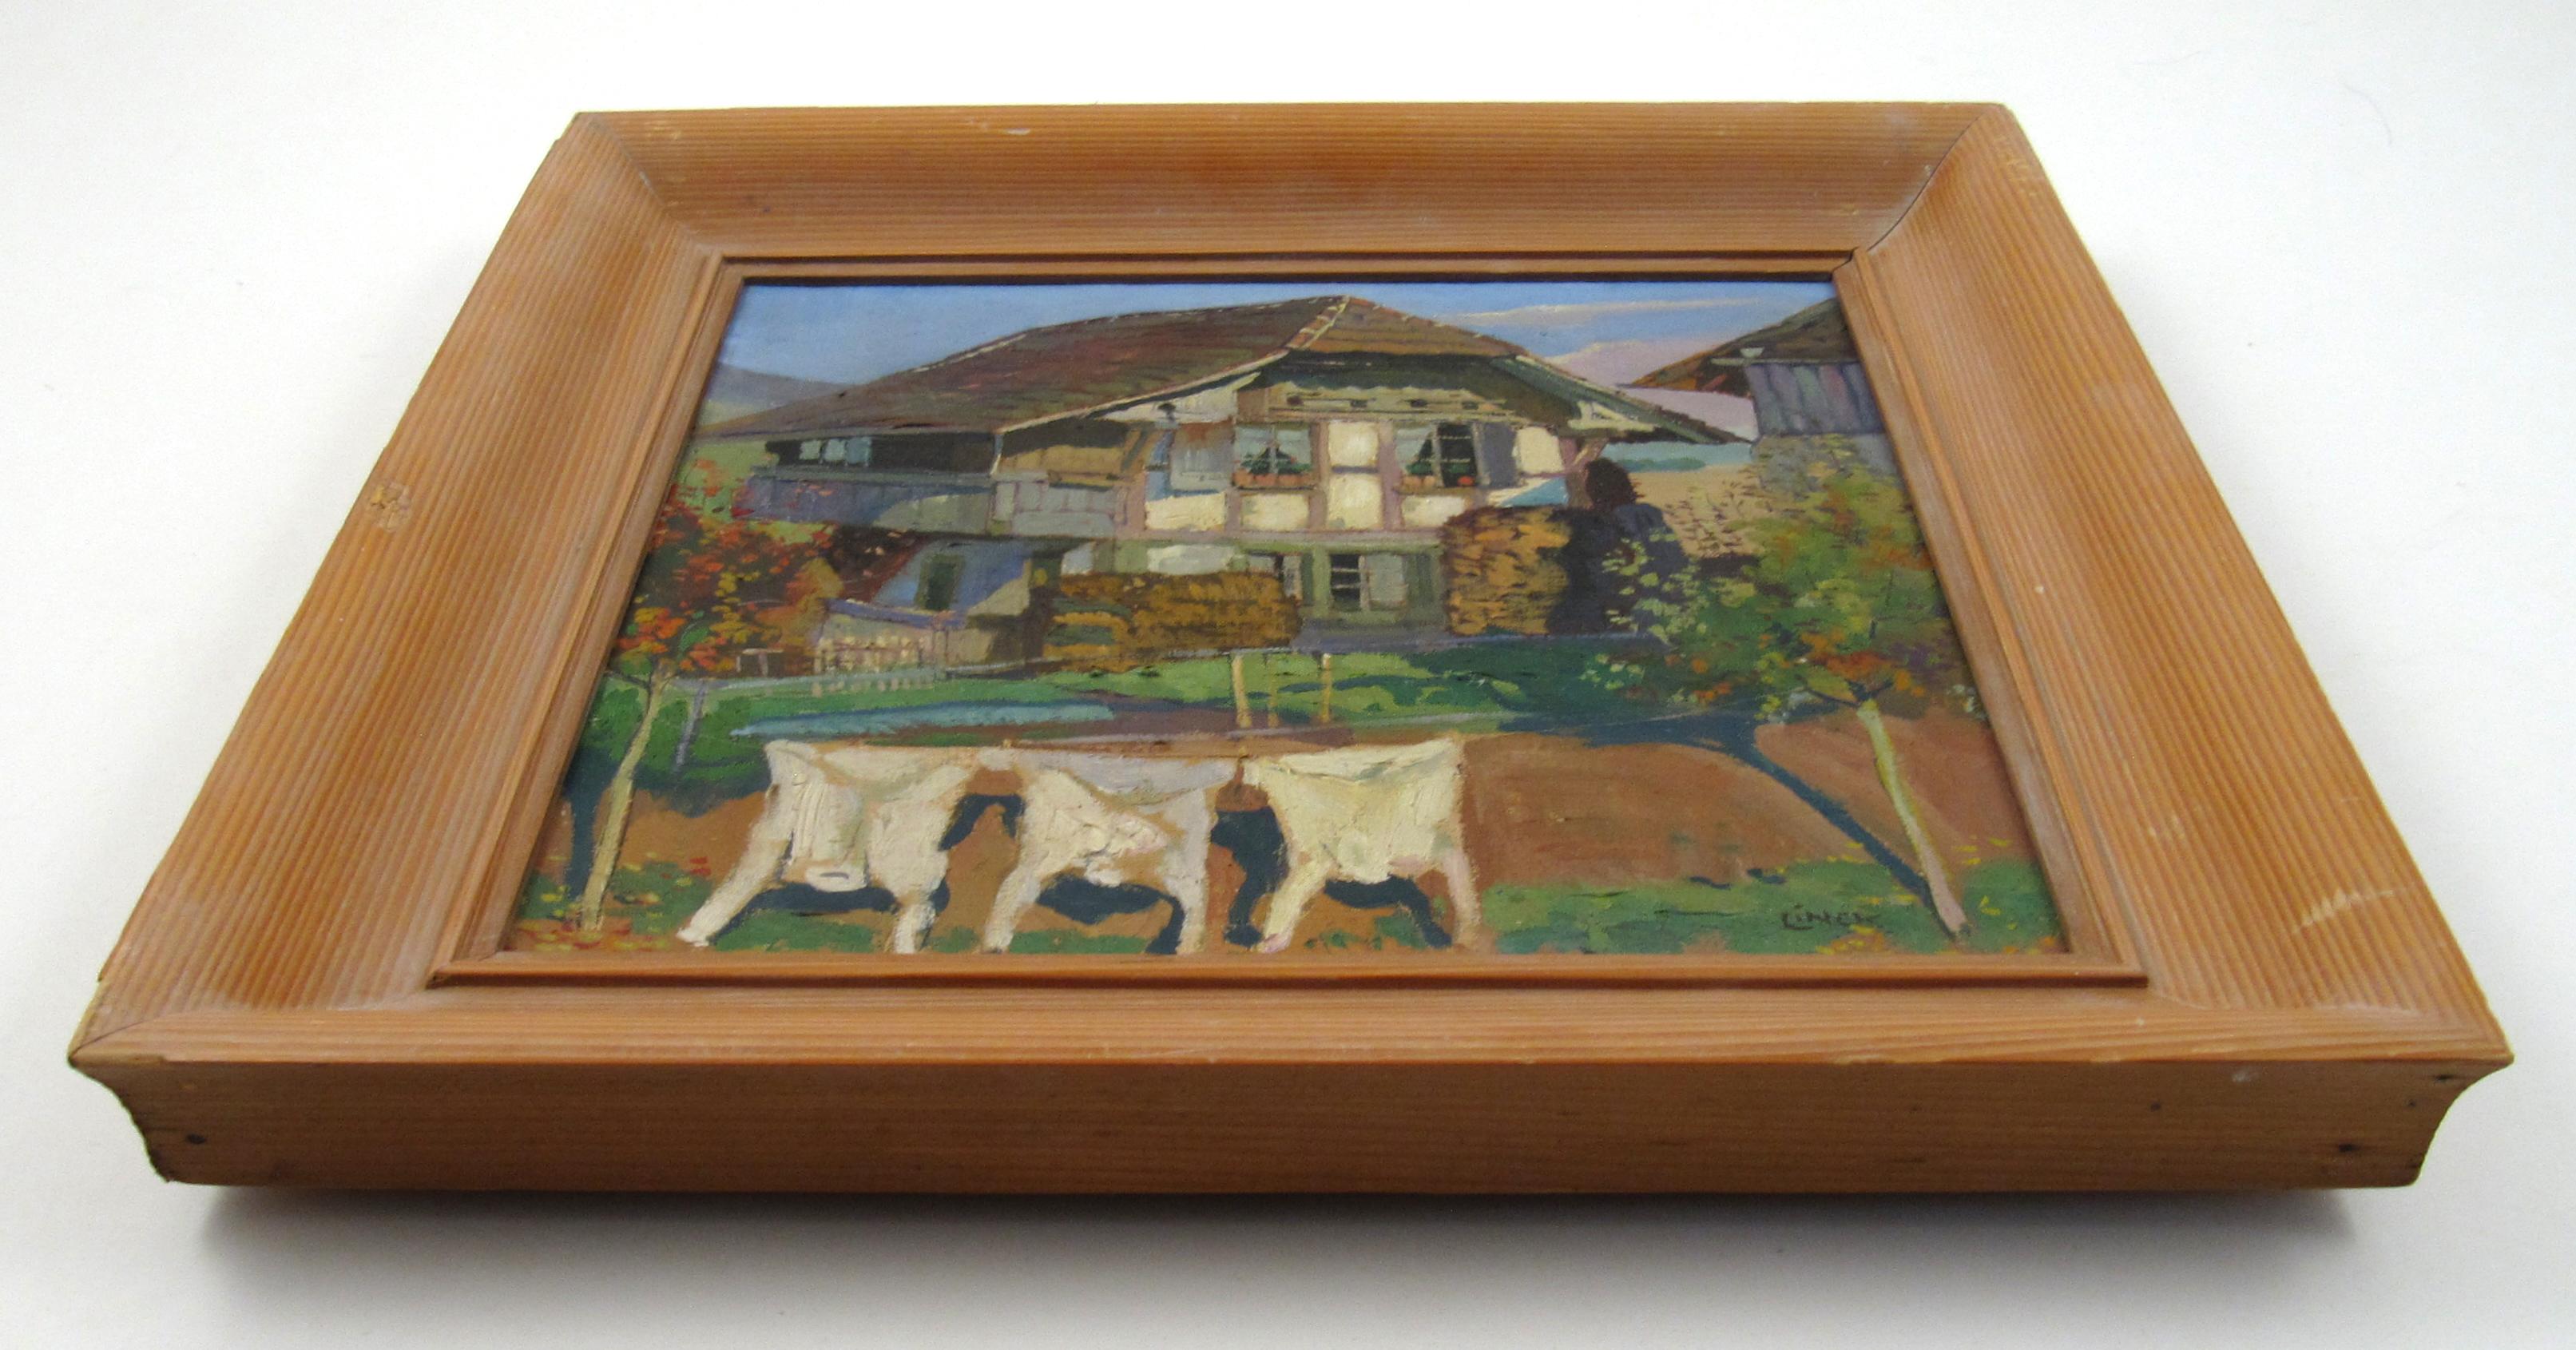 Ernst LINCK (1874 - 1935) Farmhouse with Clothesline School of Berne Switzerland - Post-Impressionist Painting by Ernst Linck